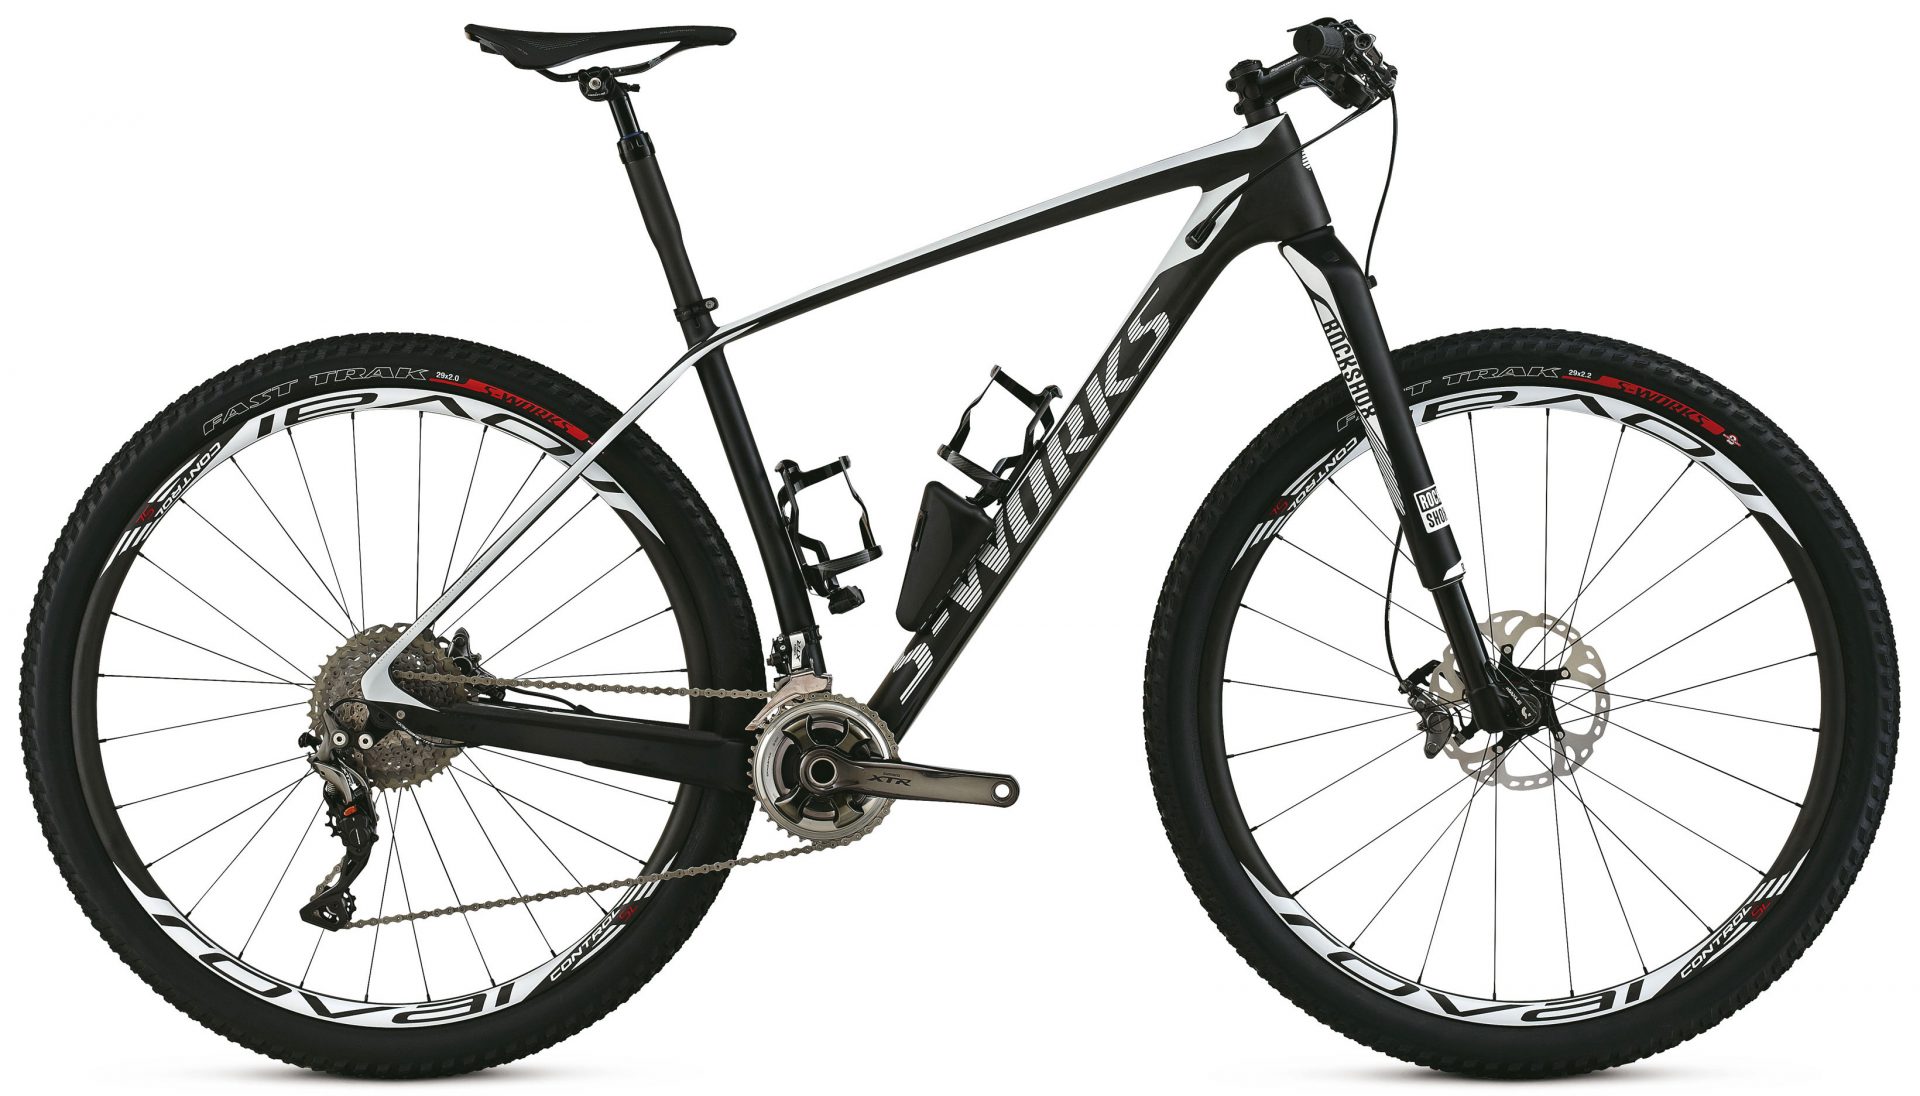 specialized-sworks-stumpjumper-hardtail-carbon-2015-29er-mountain-bike-satin-carbon-white-EV212326-8590-1